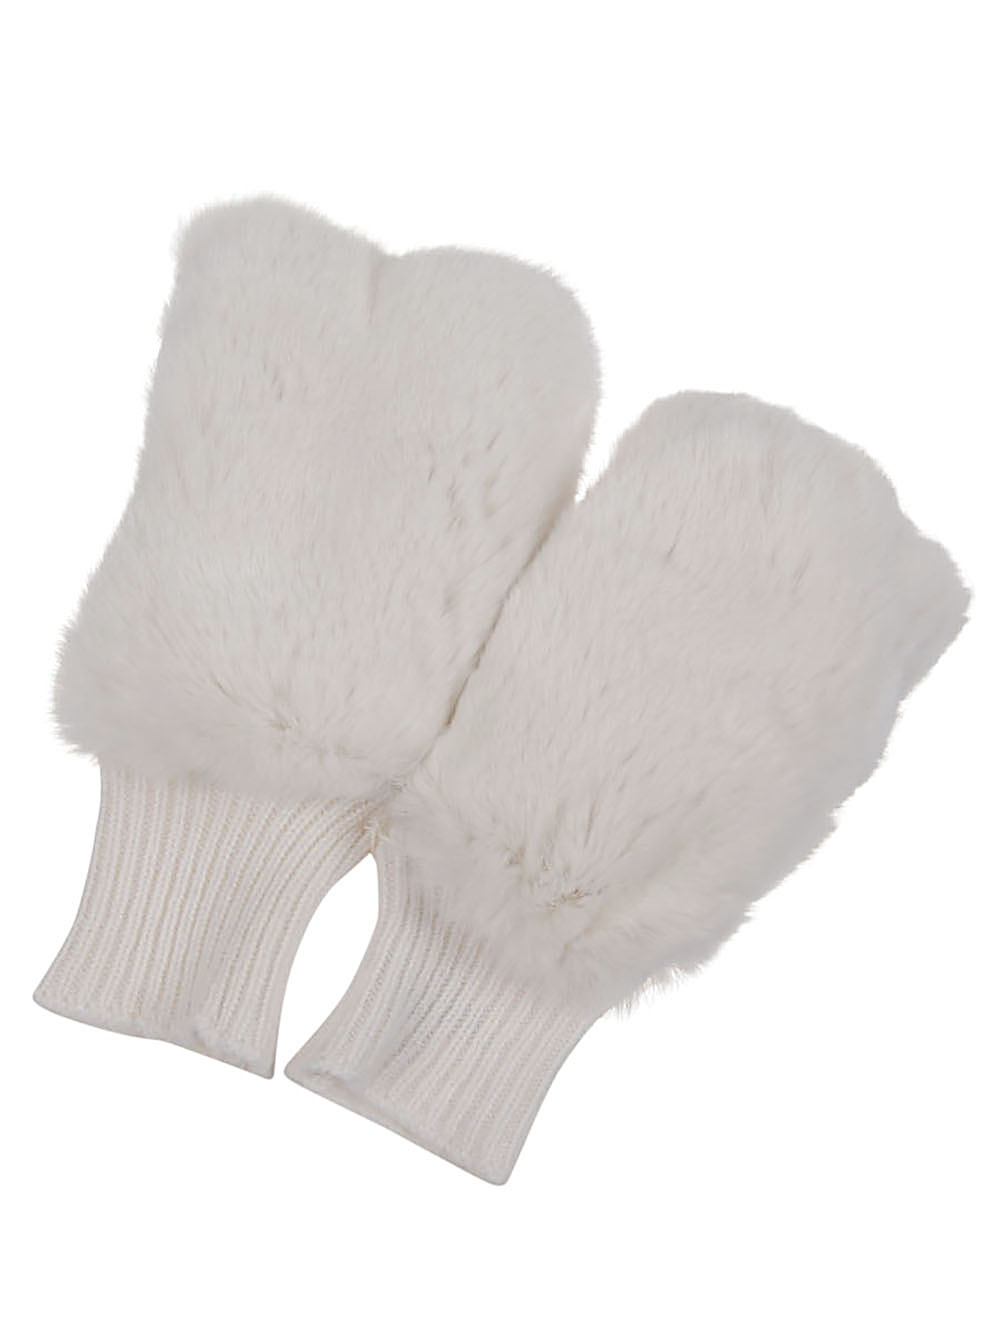  ALPO- Shearling Gloves